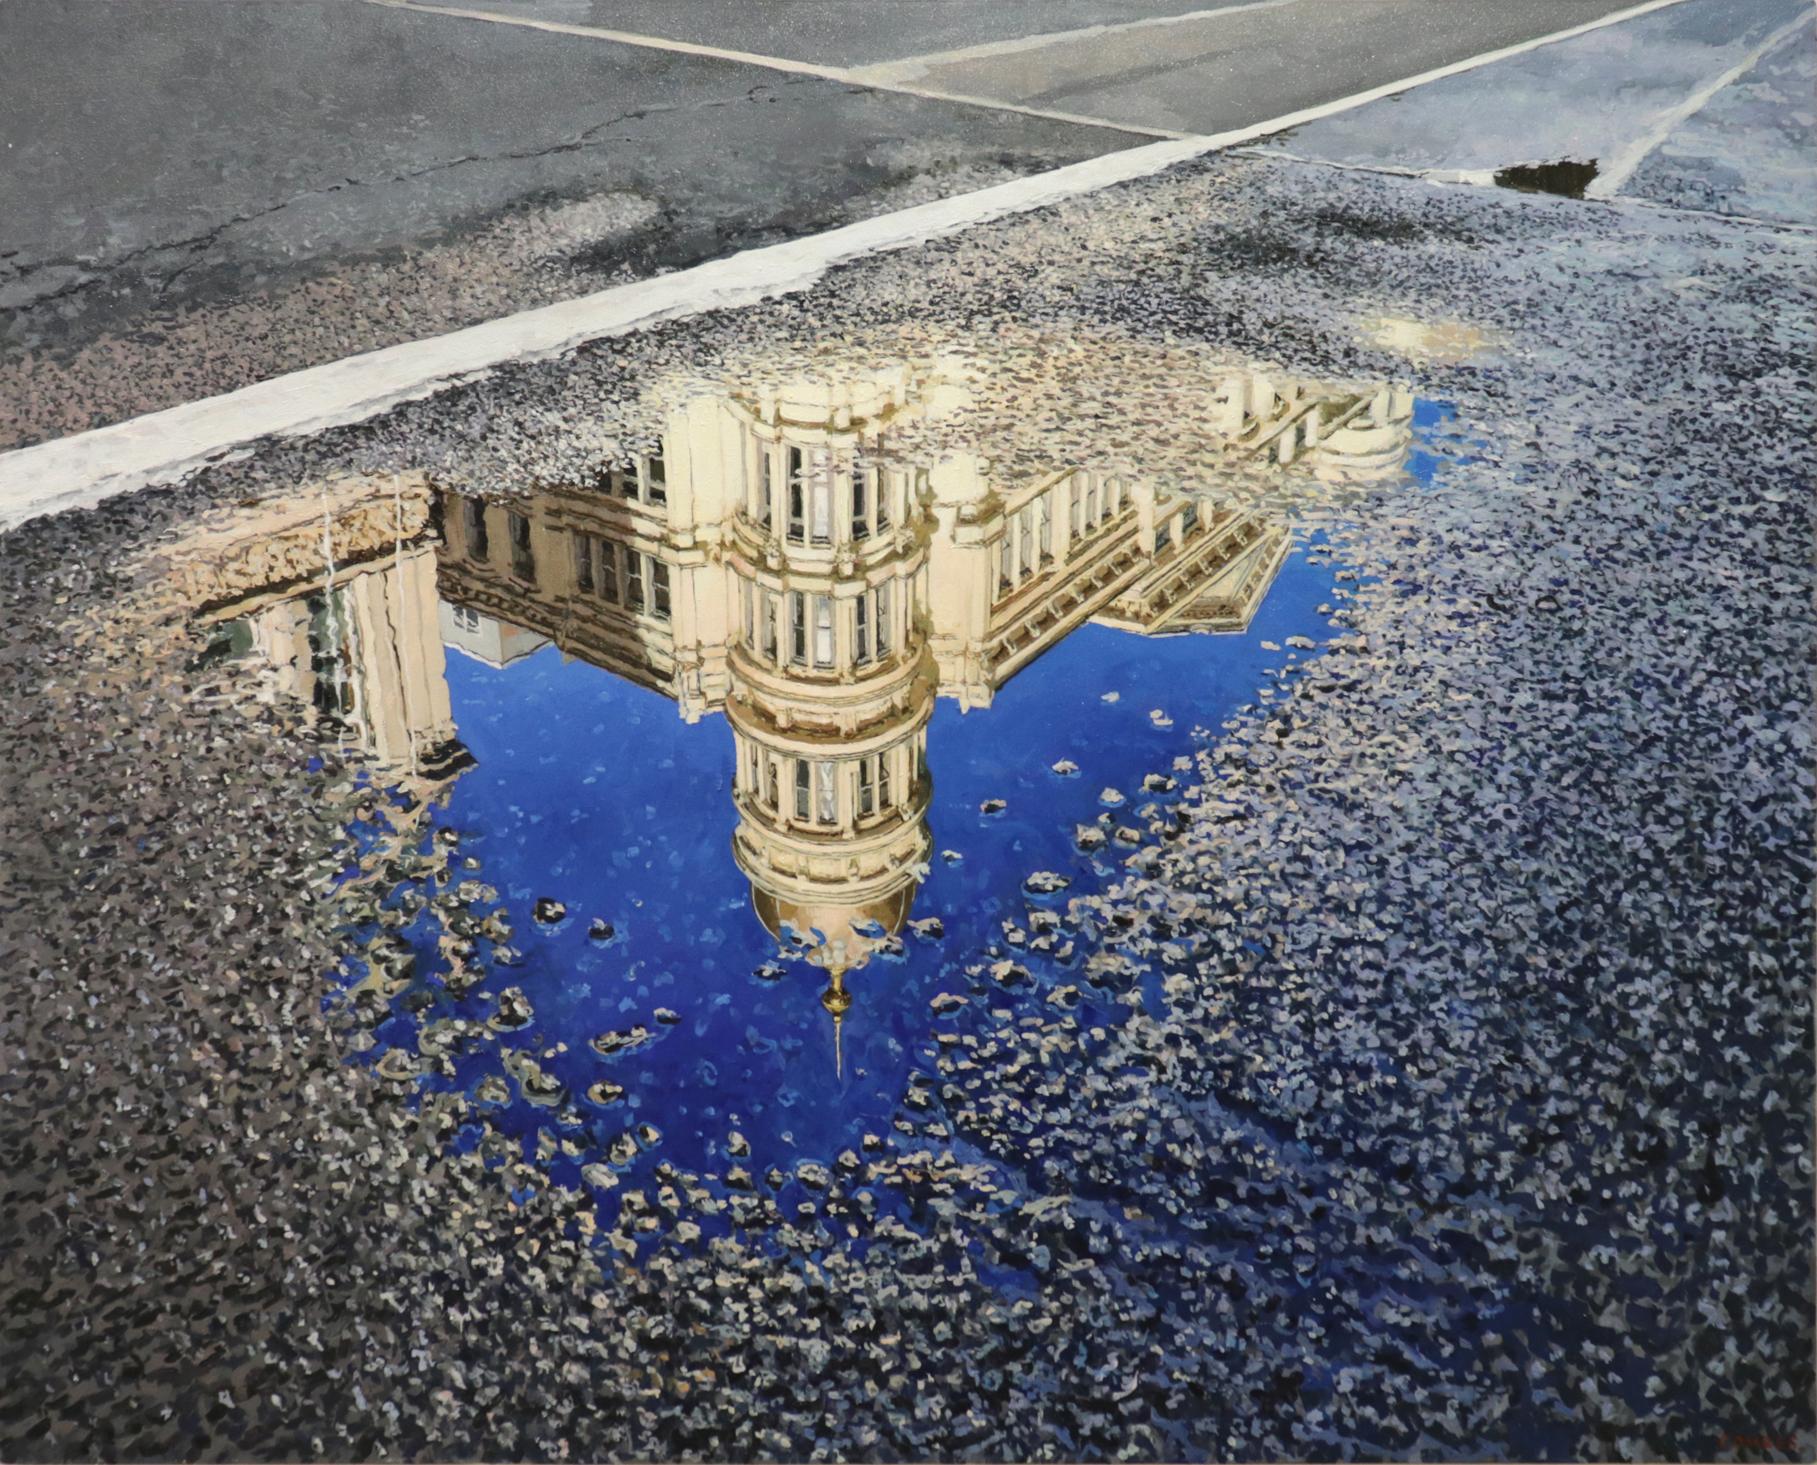 Richard Combes Landscape Painting - 6TH AVENUE REFLECTION - New York City / Rainy Street Scene / Photorealism